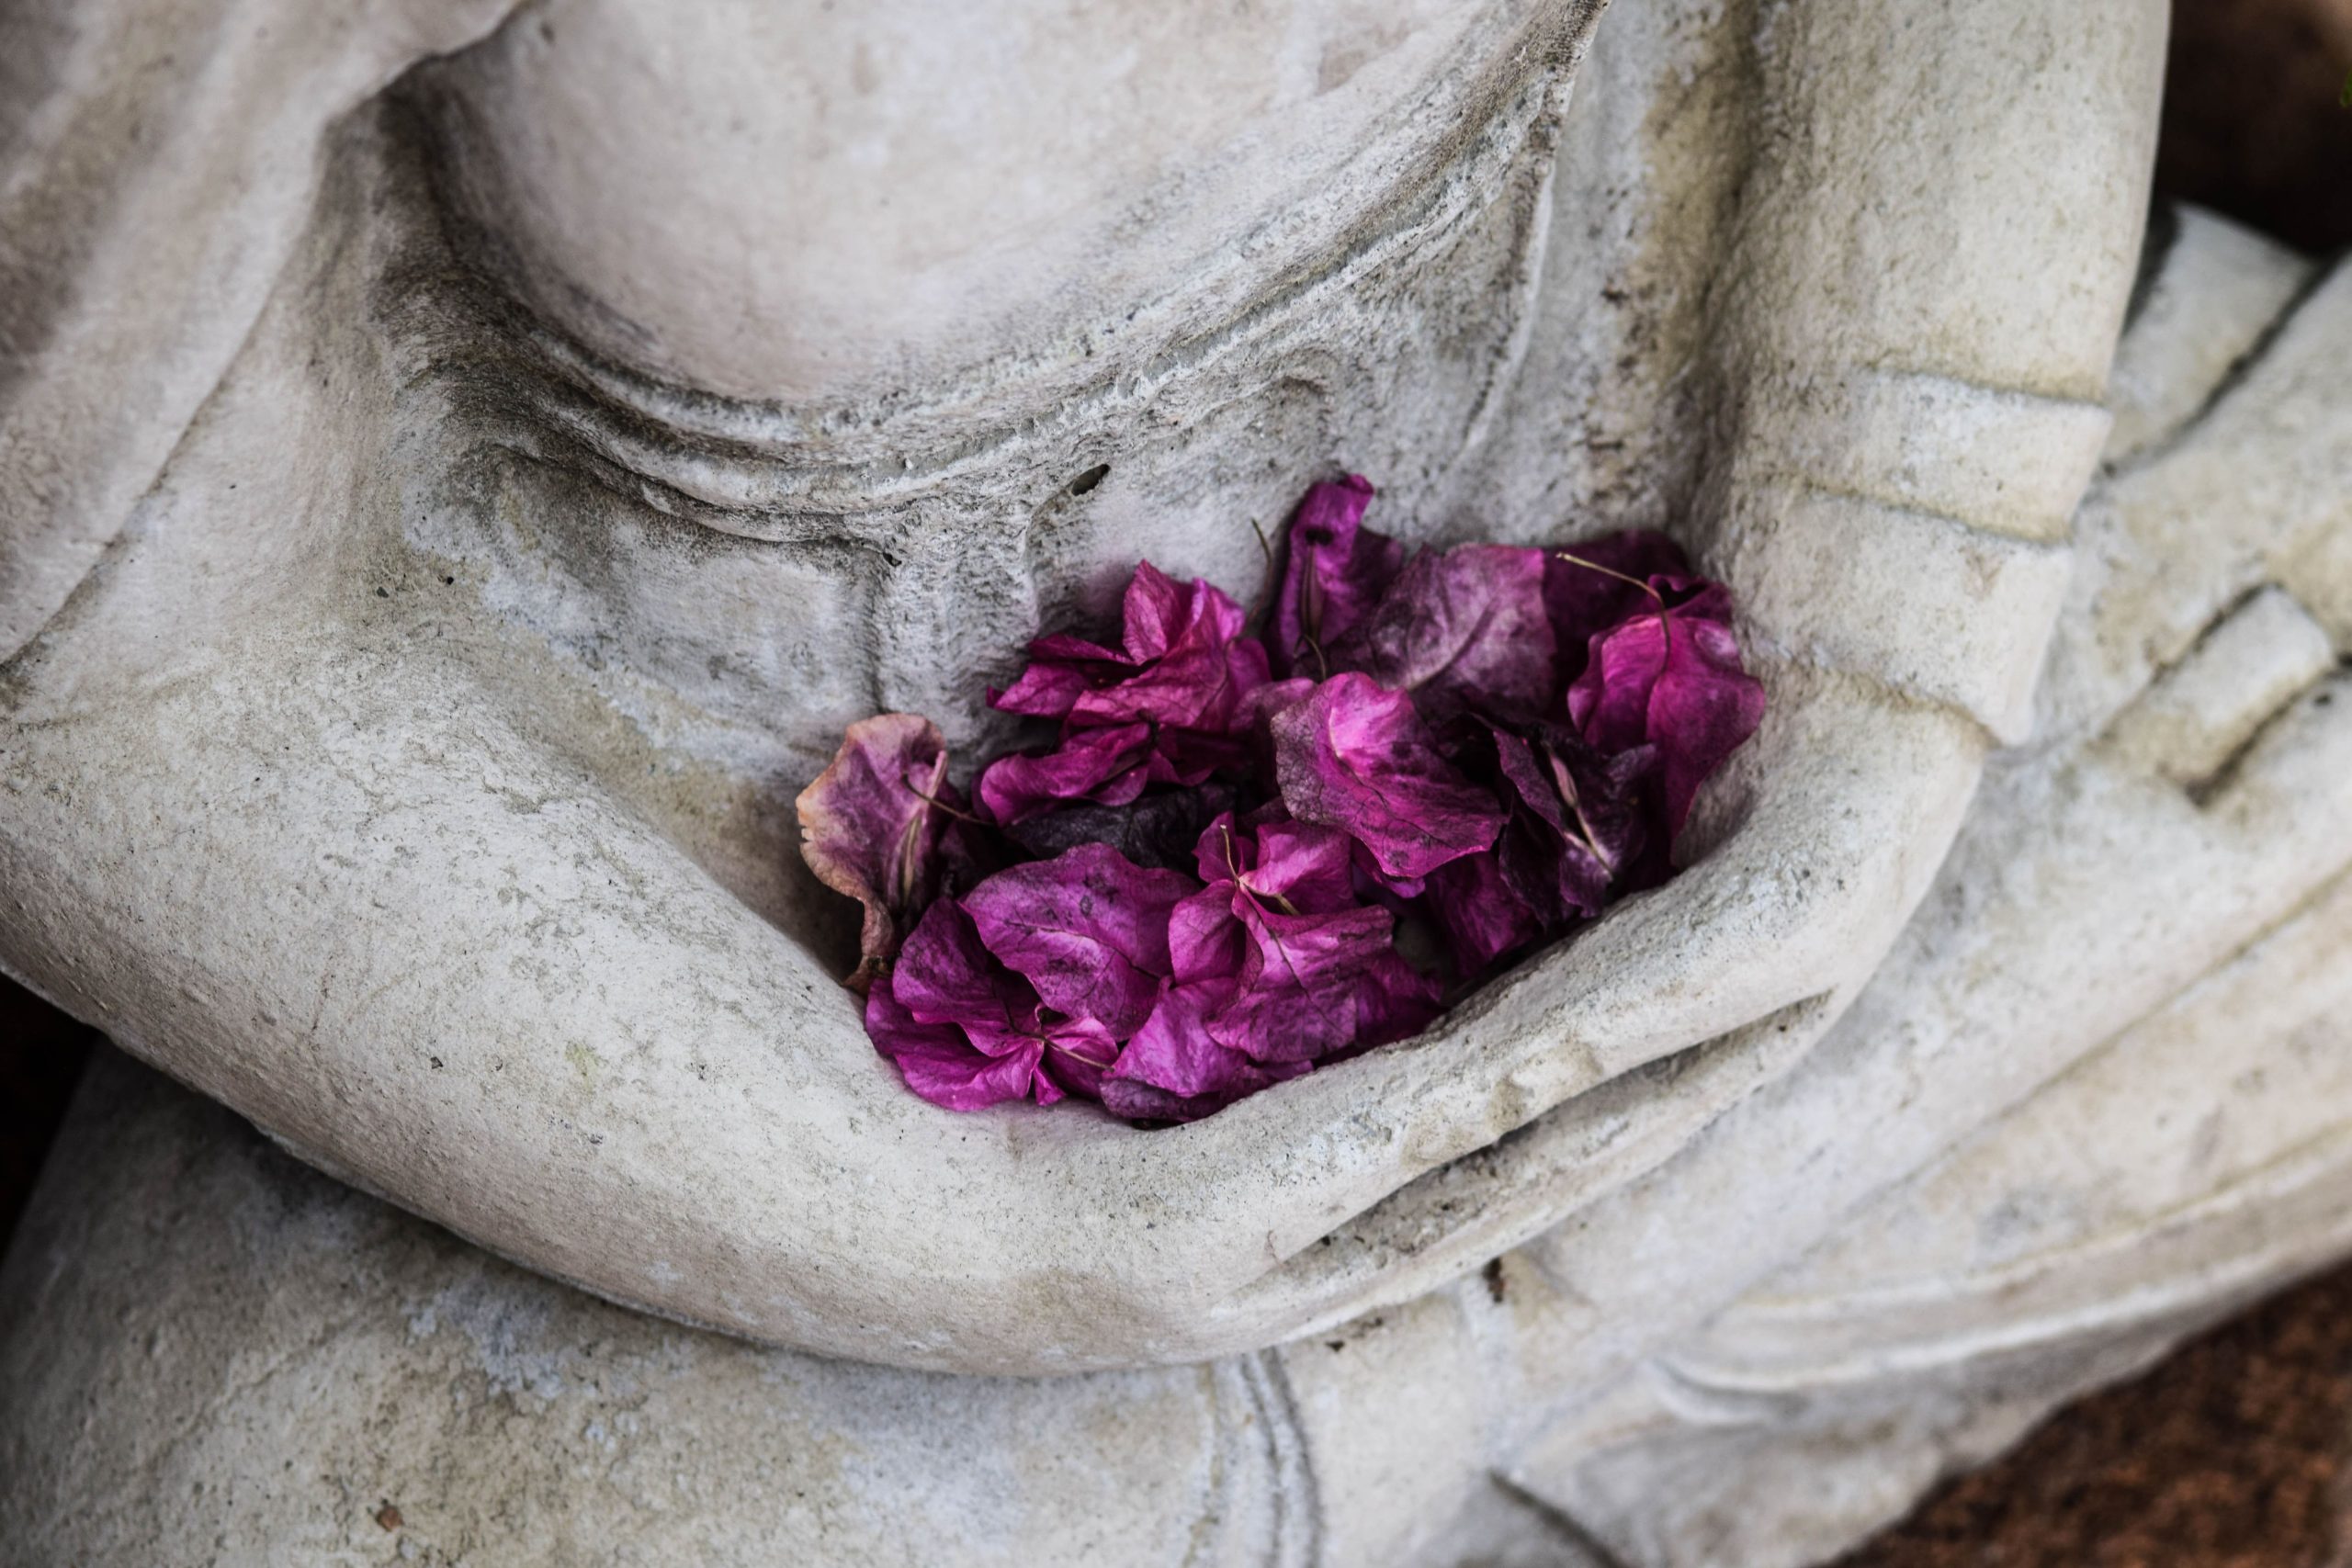 A statue of a buddha holding purple flowers.